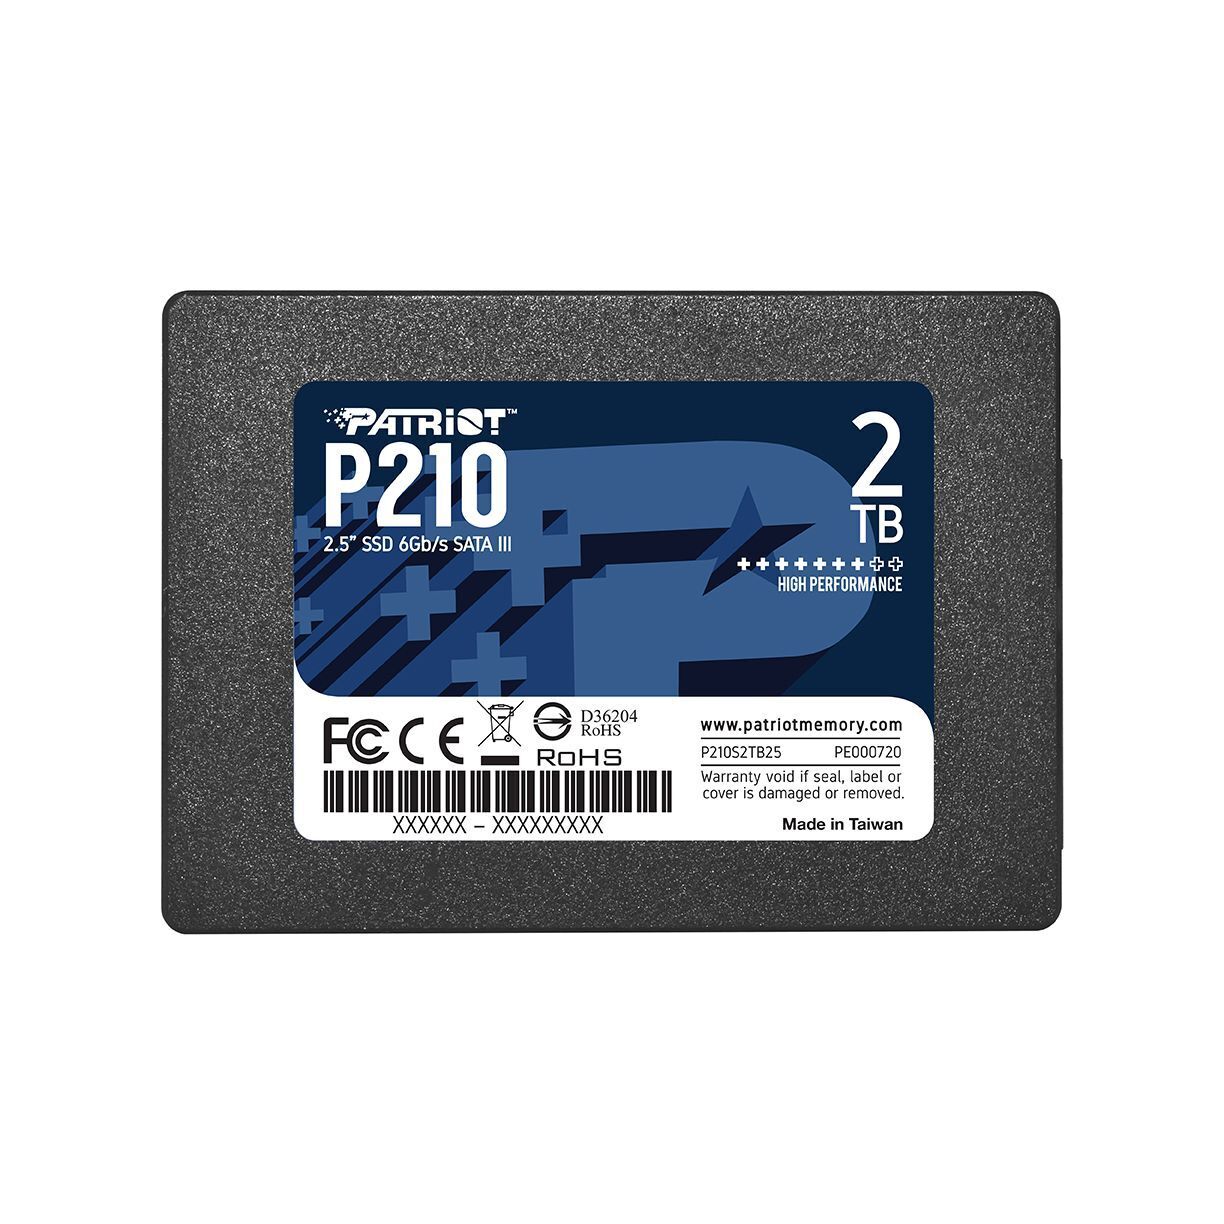 Patriot P210 2TB SSD 2.5